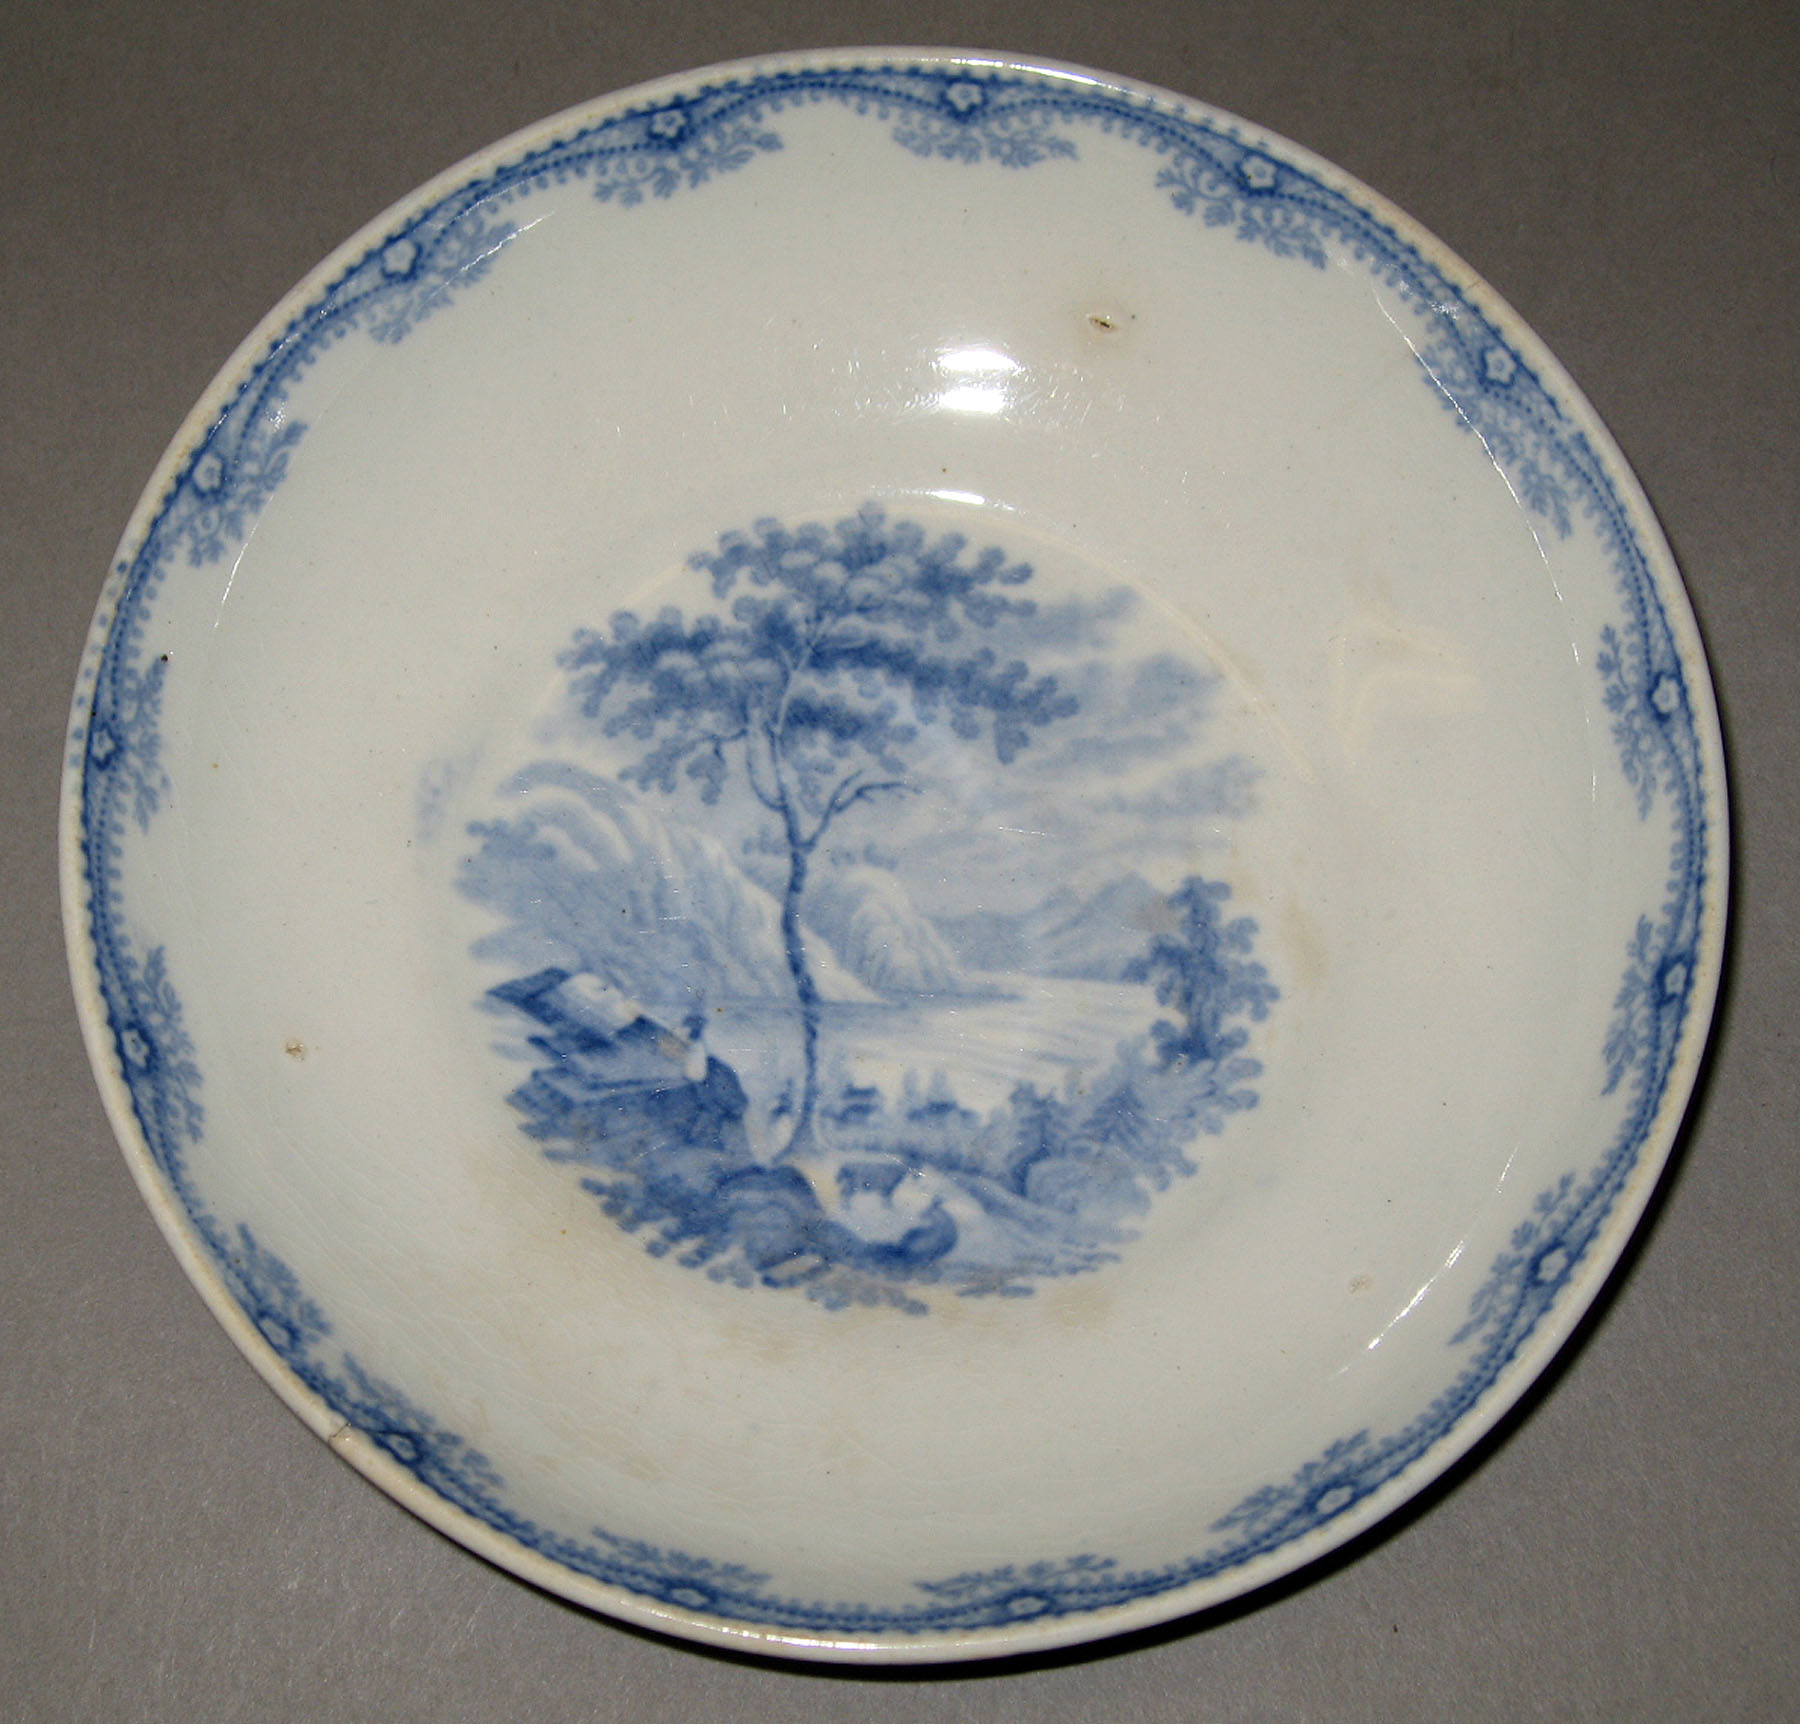 1965.2915.011 Ridgway earthenware saucer